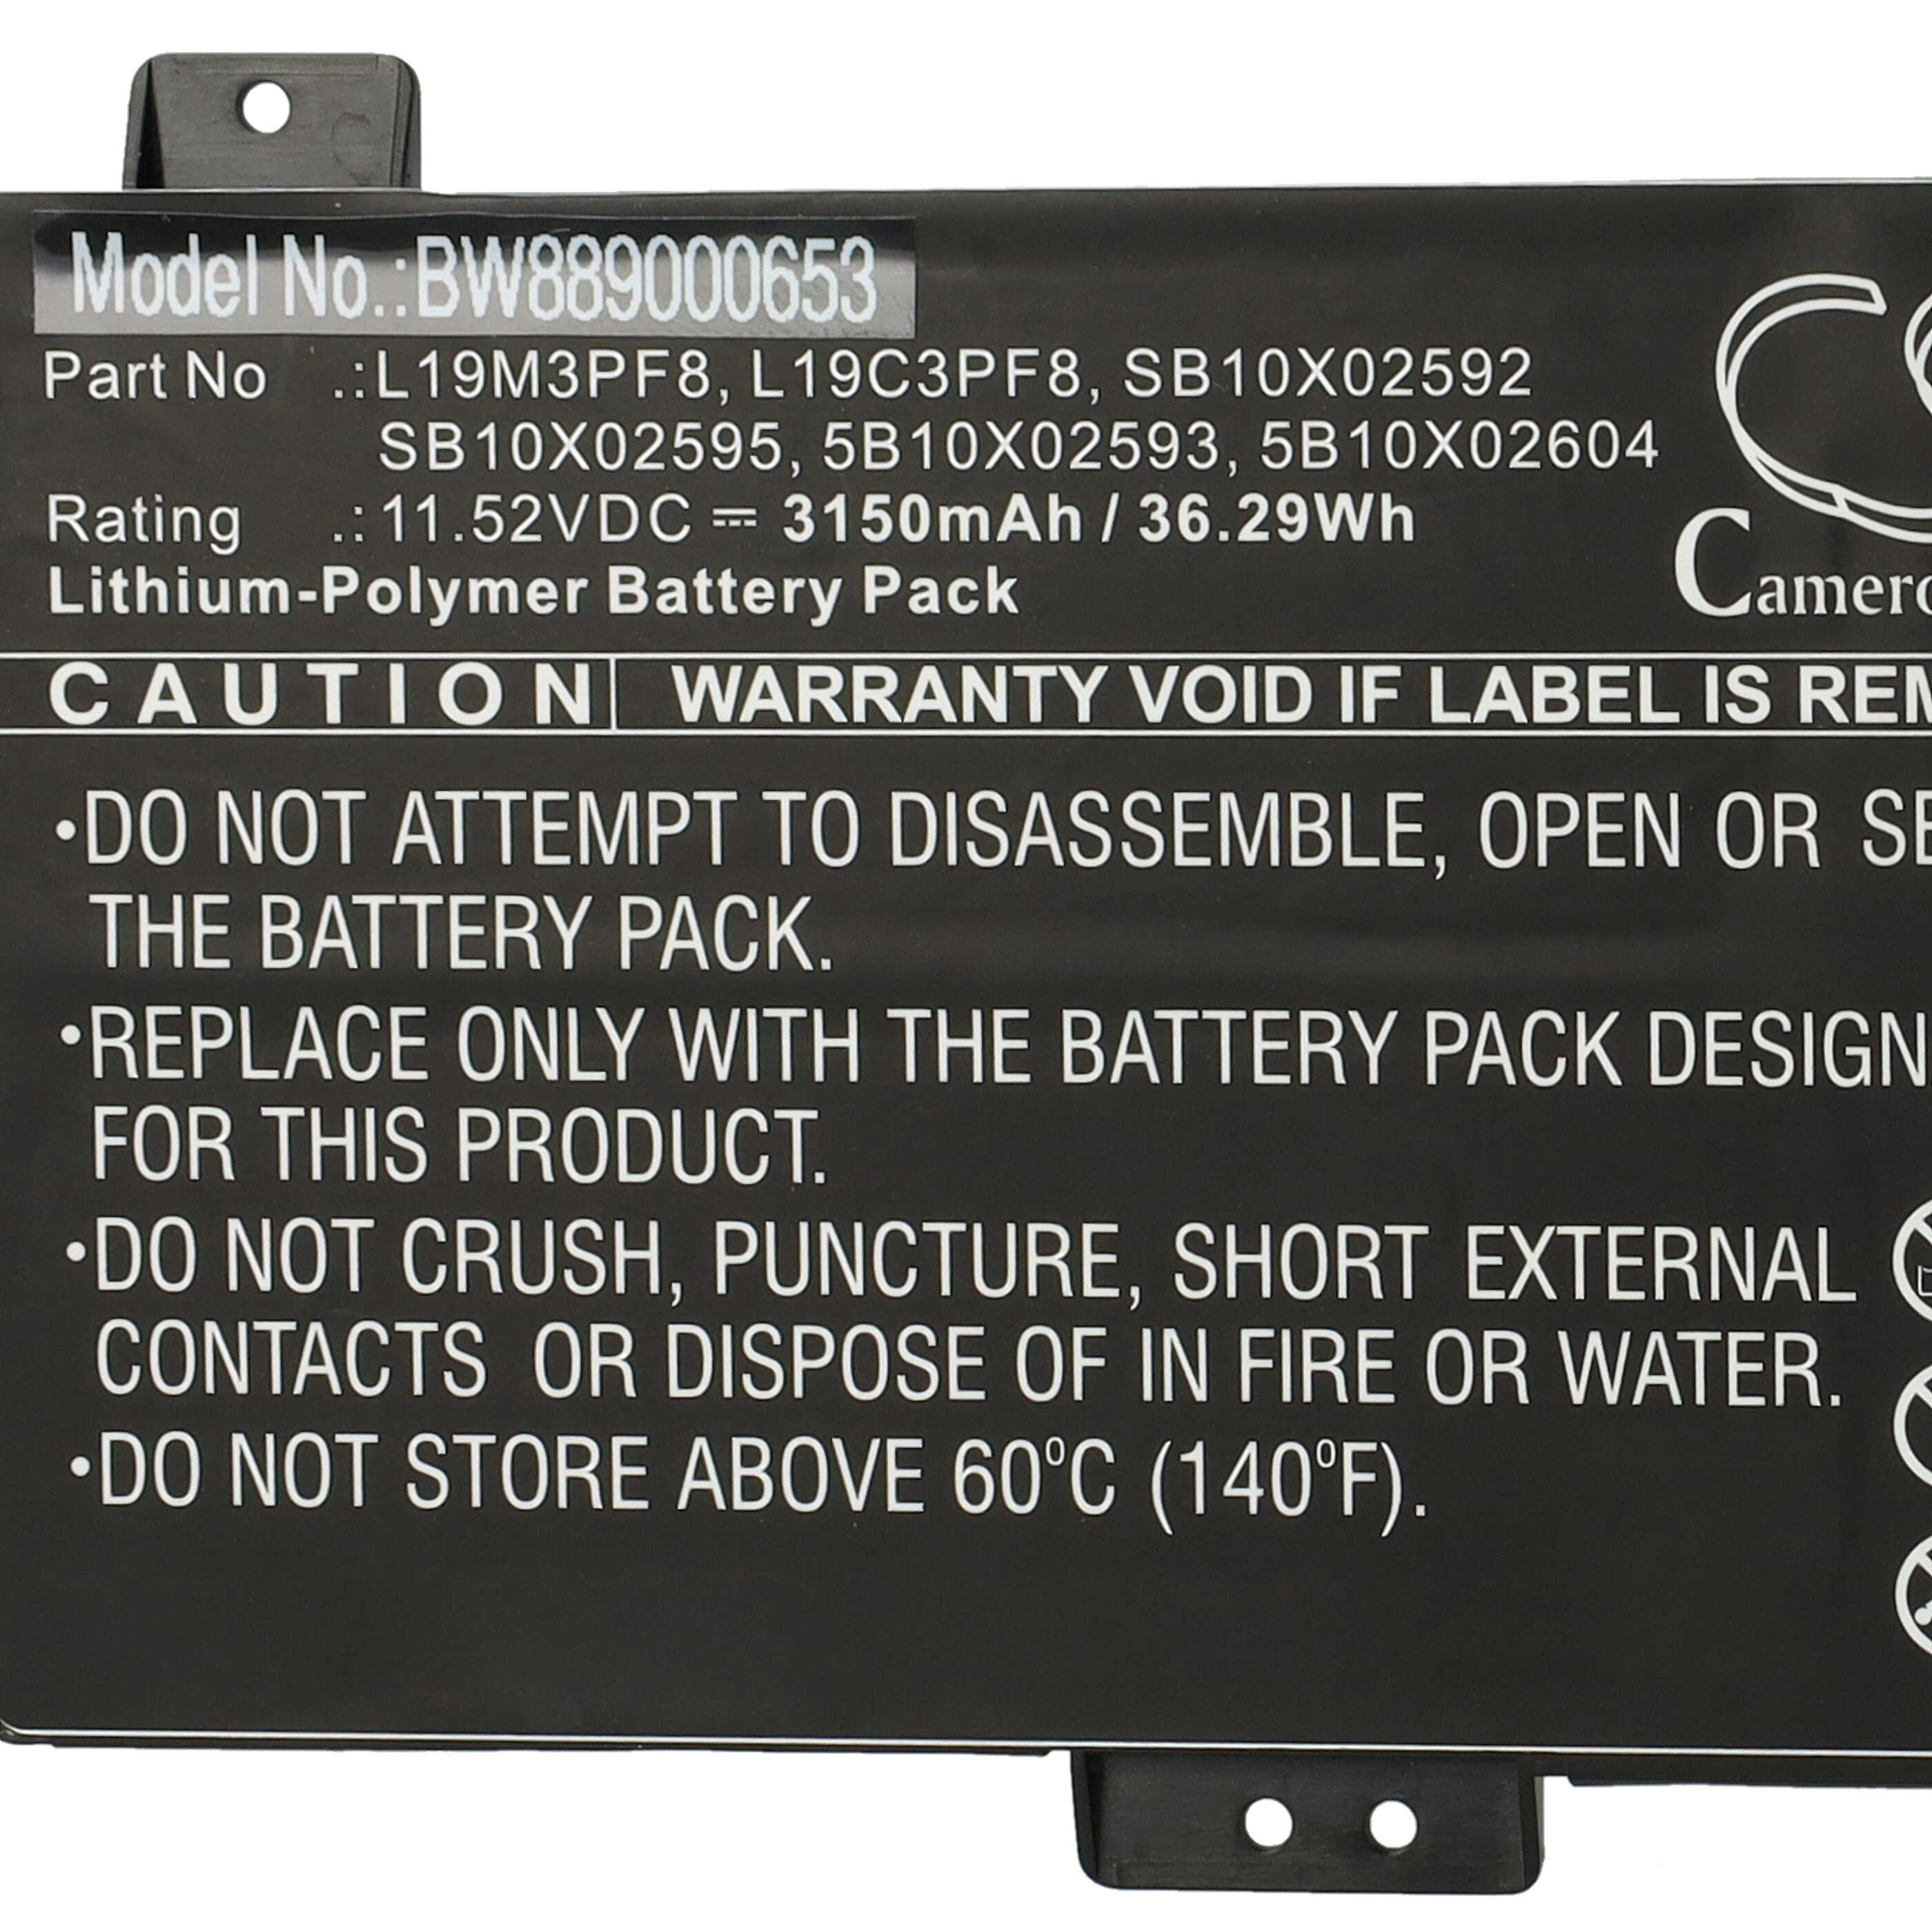 Batería reemplaza Lenovo 5B10X02593, 5B10X02604, L19C3PF8 para notebook Lenovo - 3150 mAh 11,52 V Li-poli